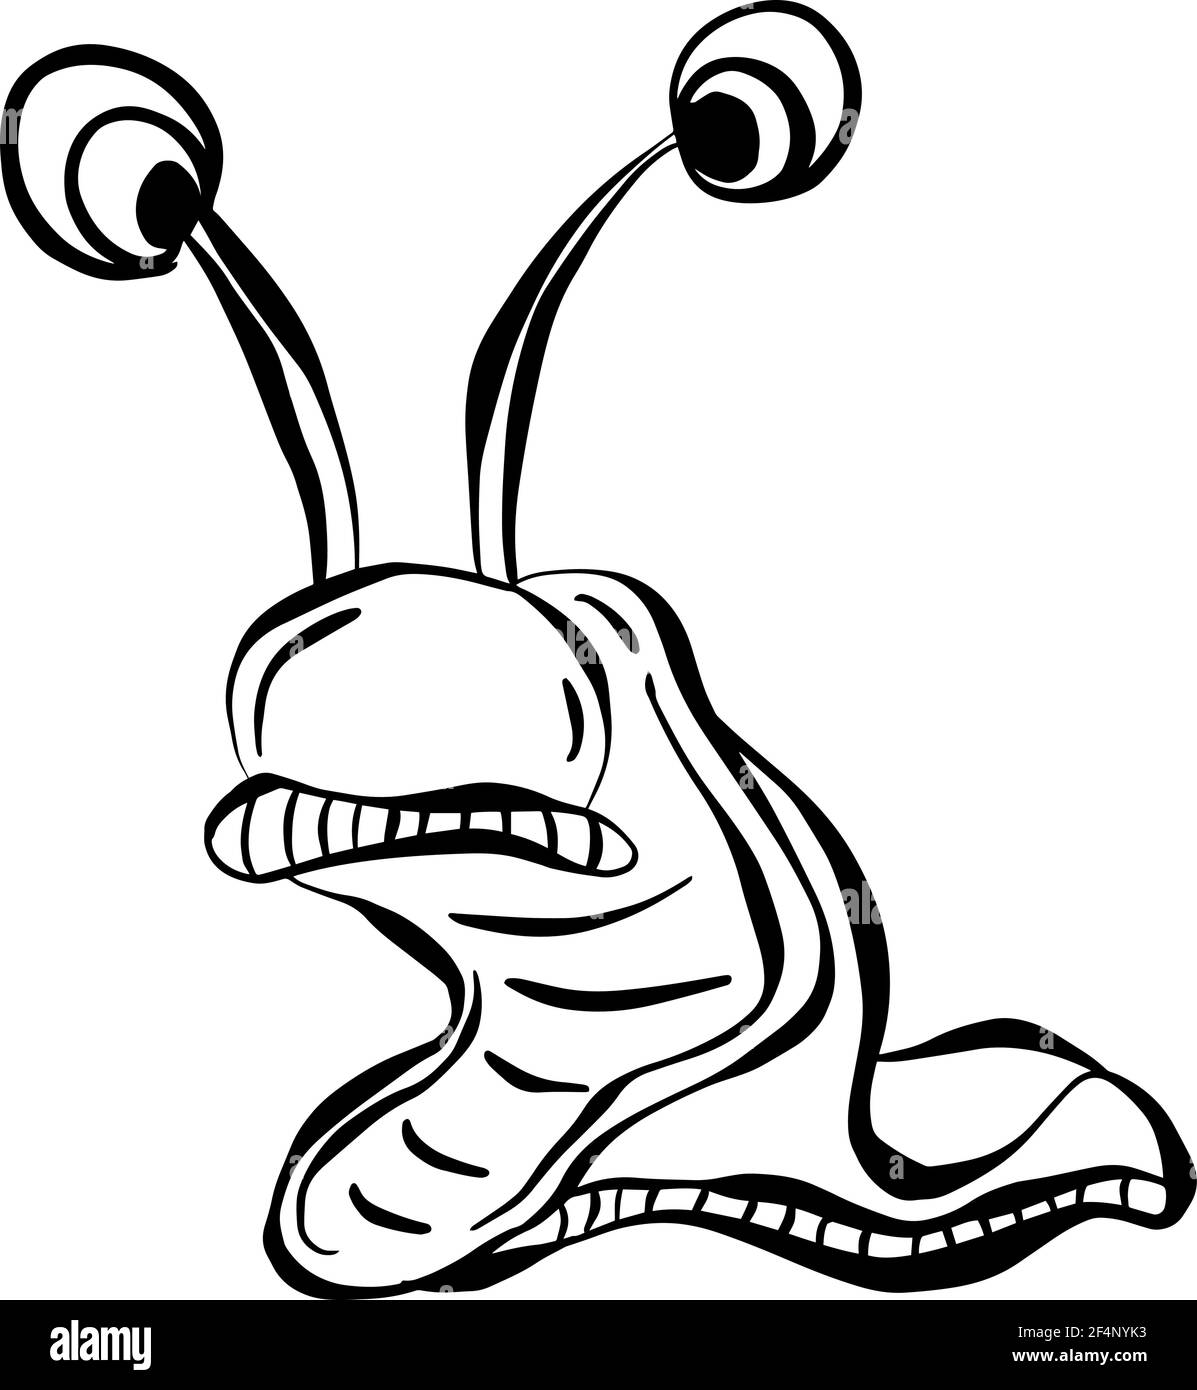 Cartoon Slug Snail Funny Illustration with Eyes Stock Vector